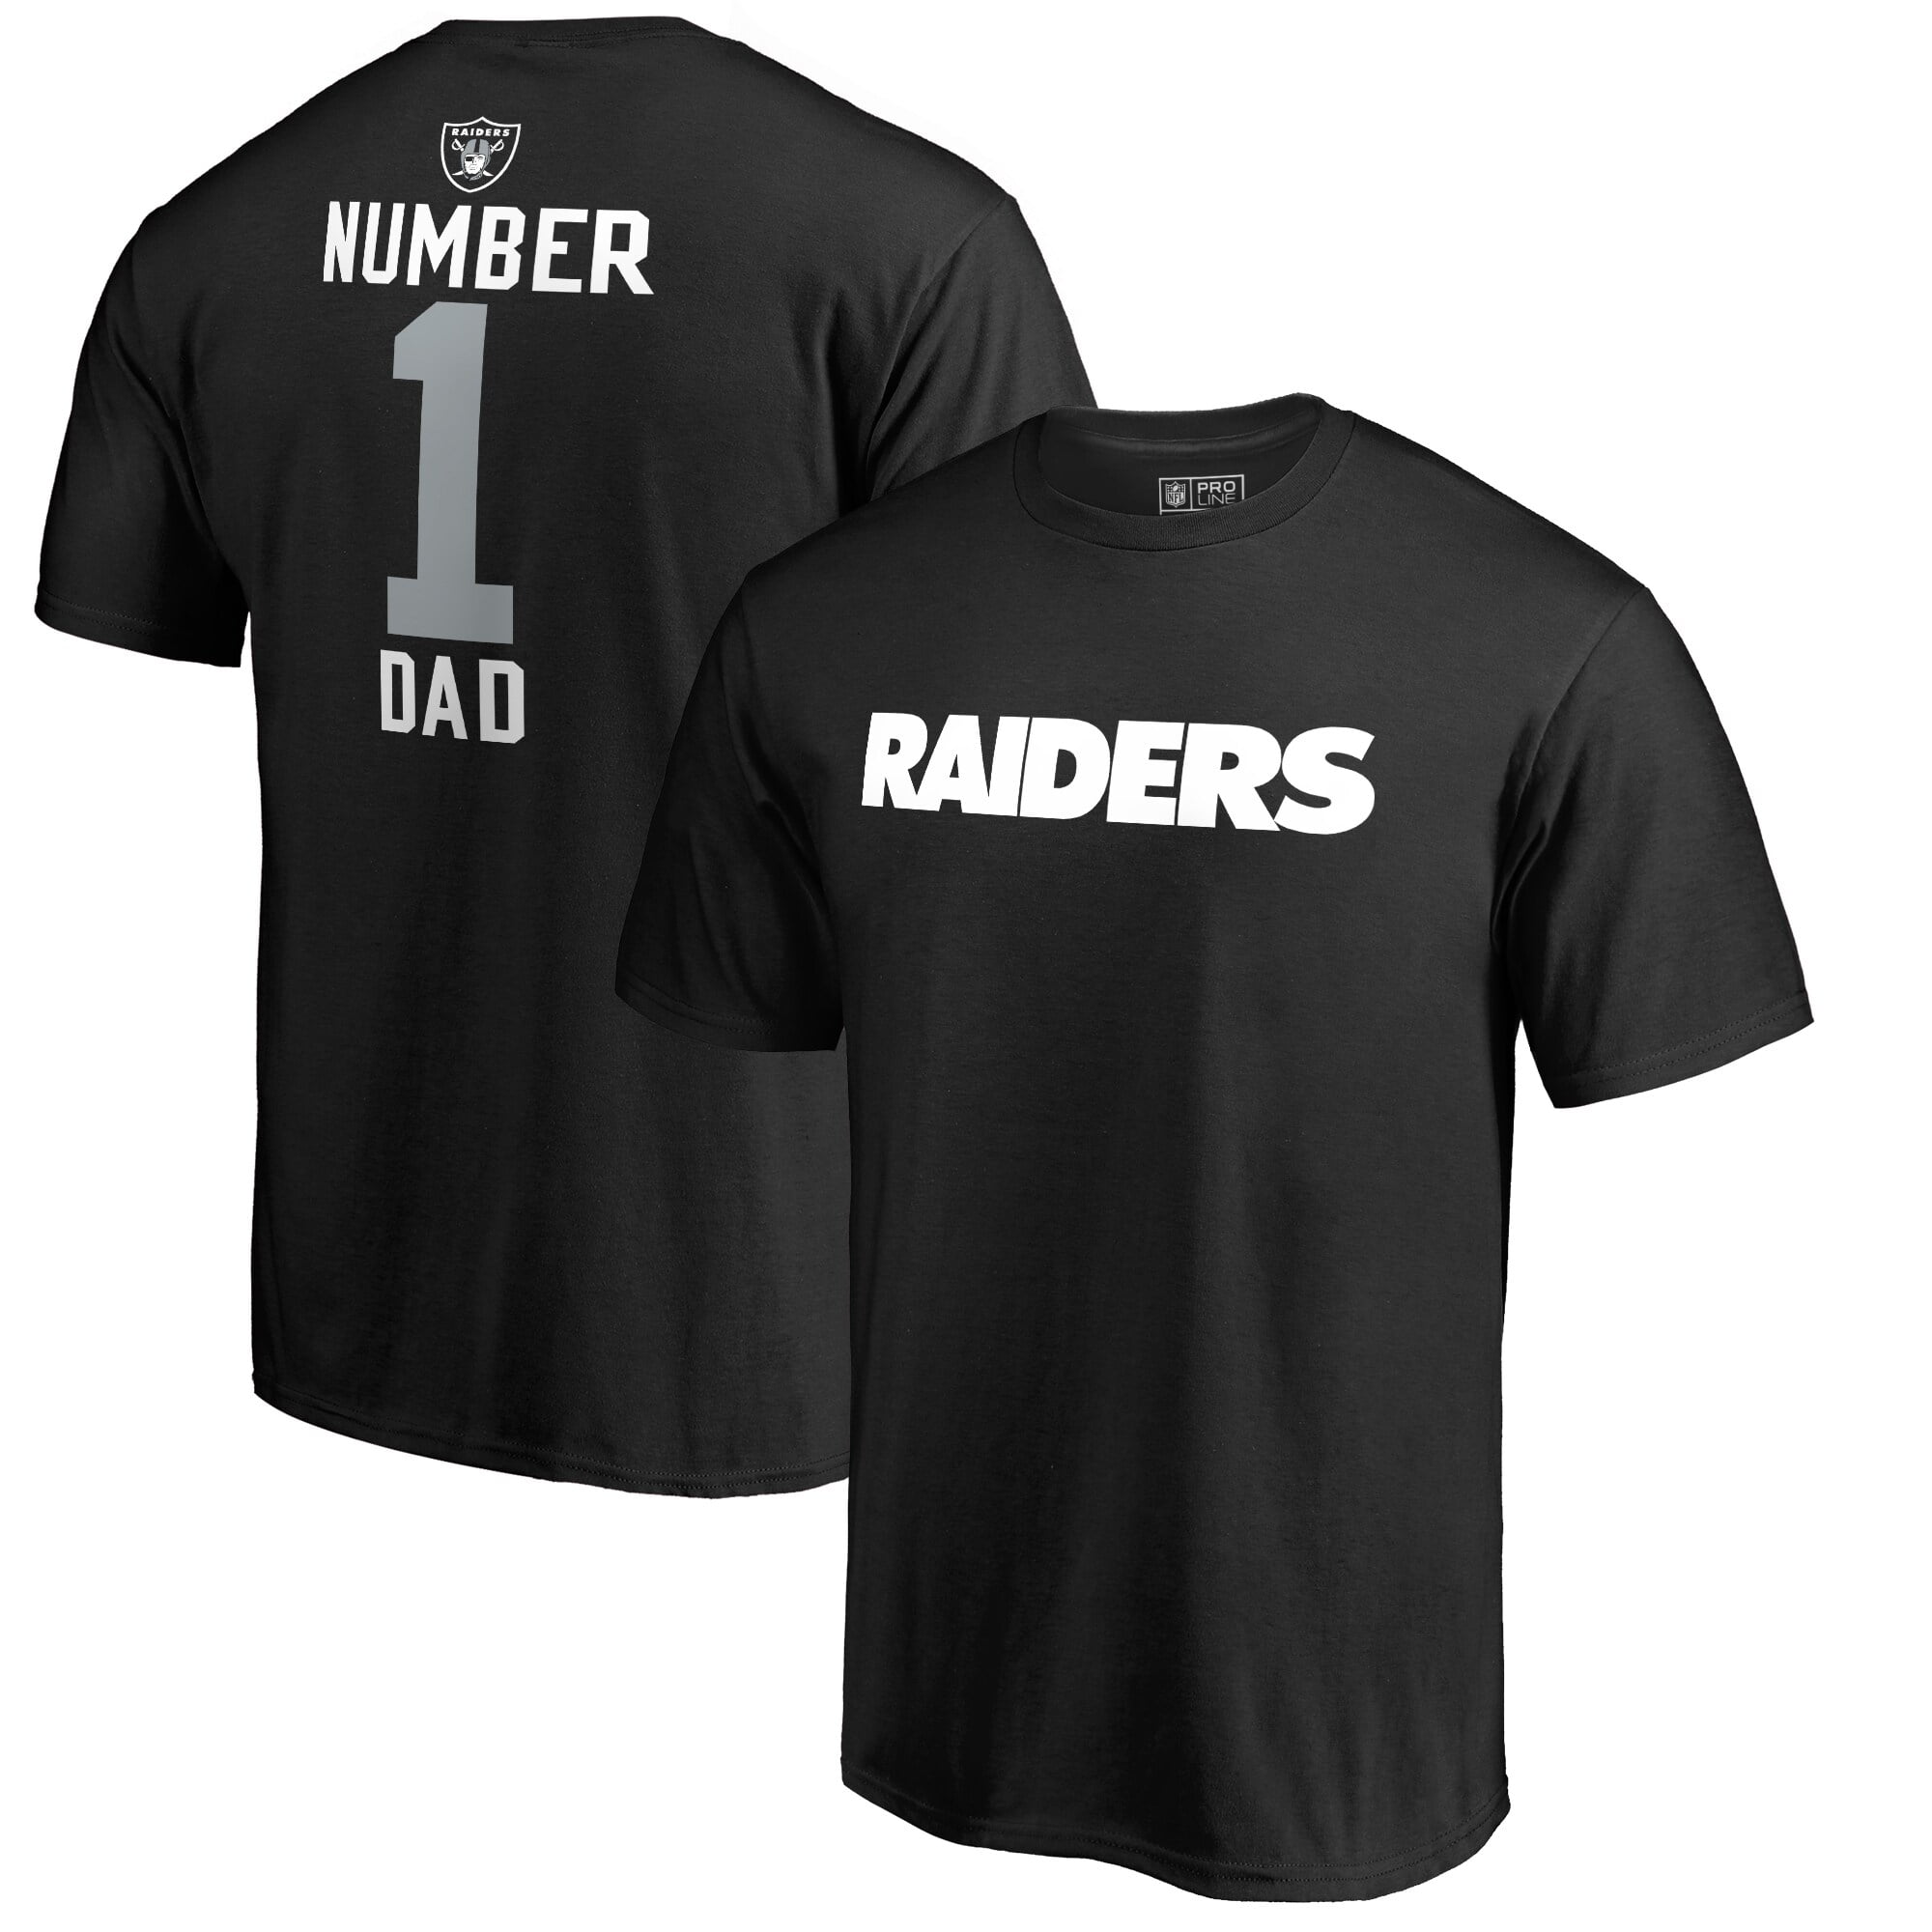 raiders number 1 dad shirt